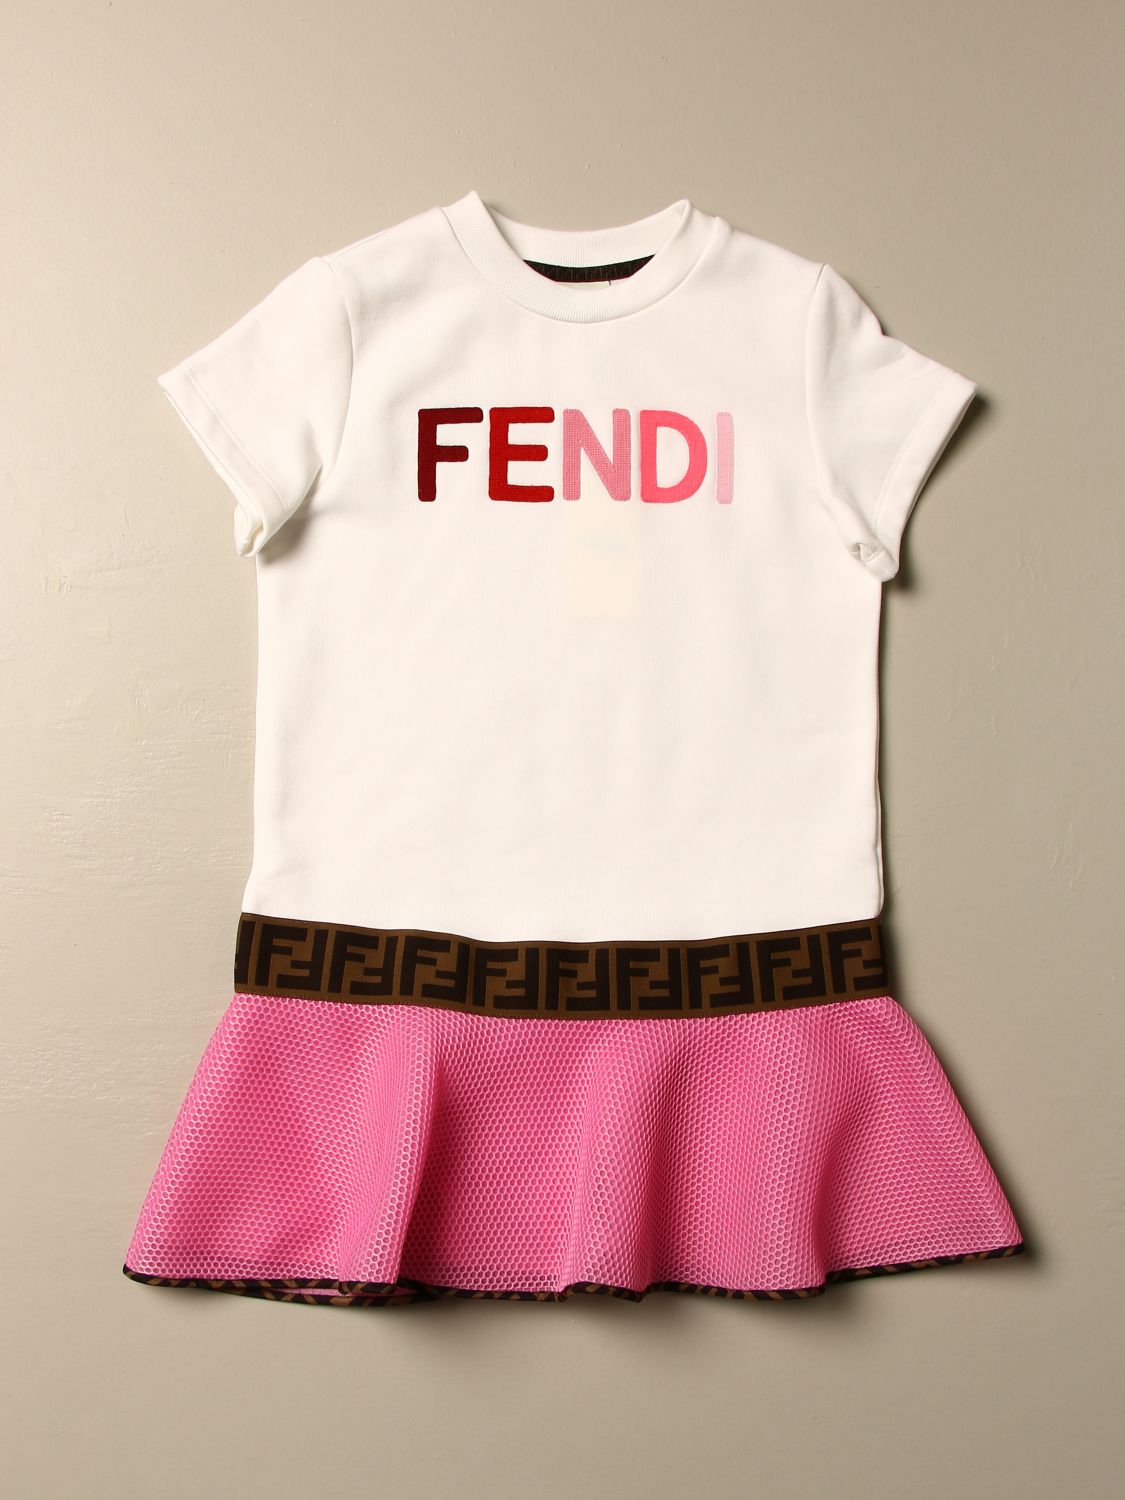 Buy > fendi mesh dress > in stock